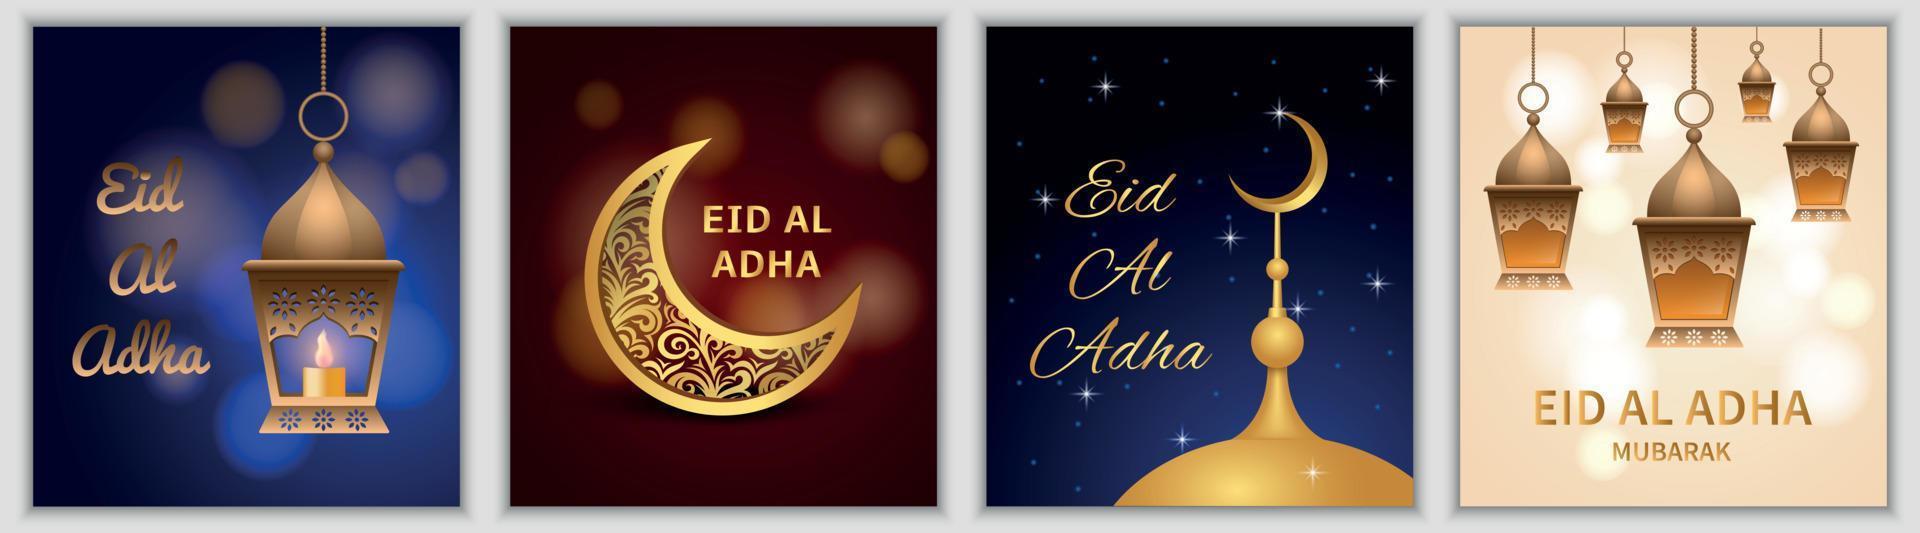 conjunto de banner do festival eid al adha, estilo realista vetor